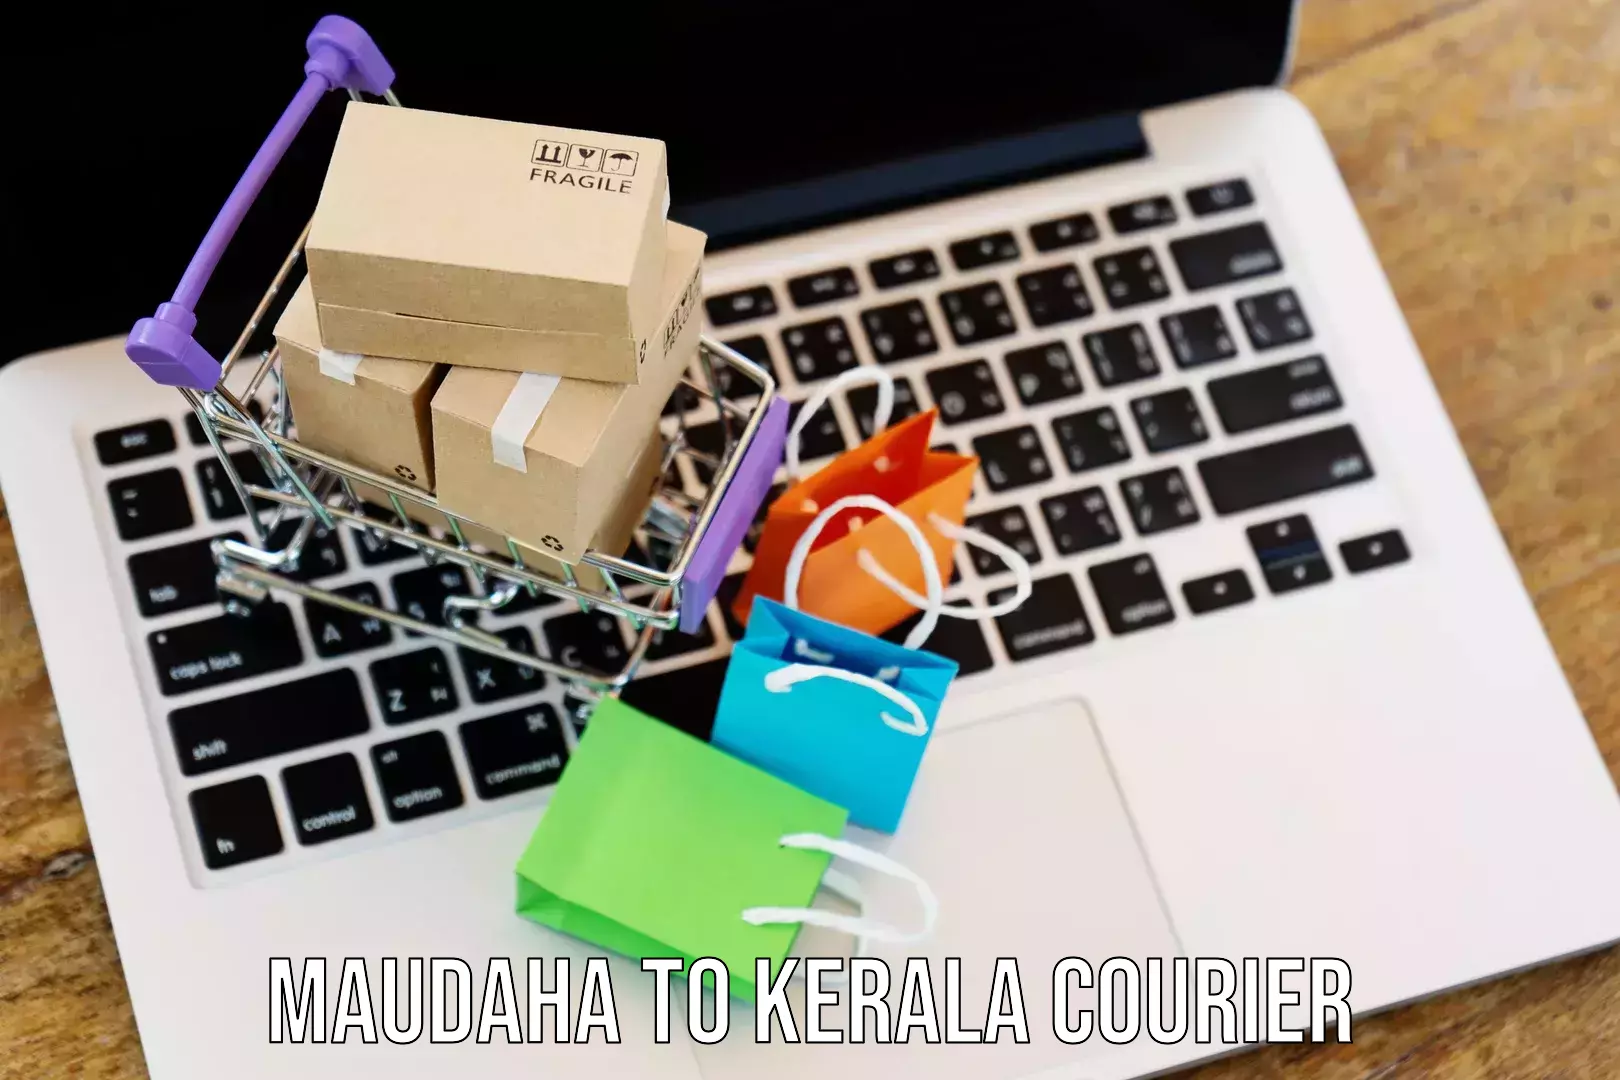 Automated shipping Maudaha to Kerala